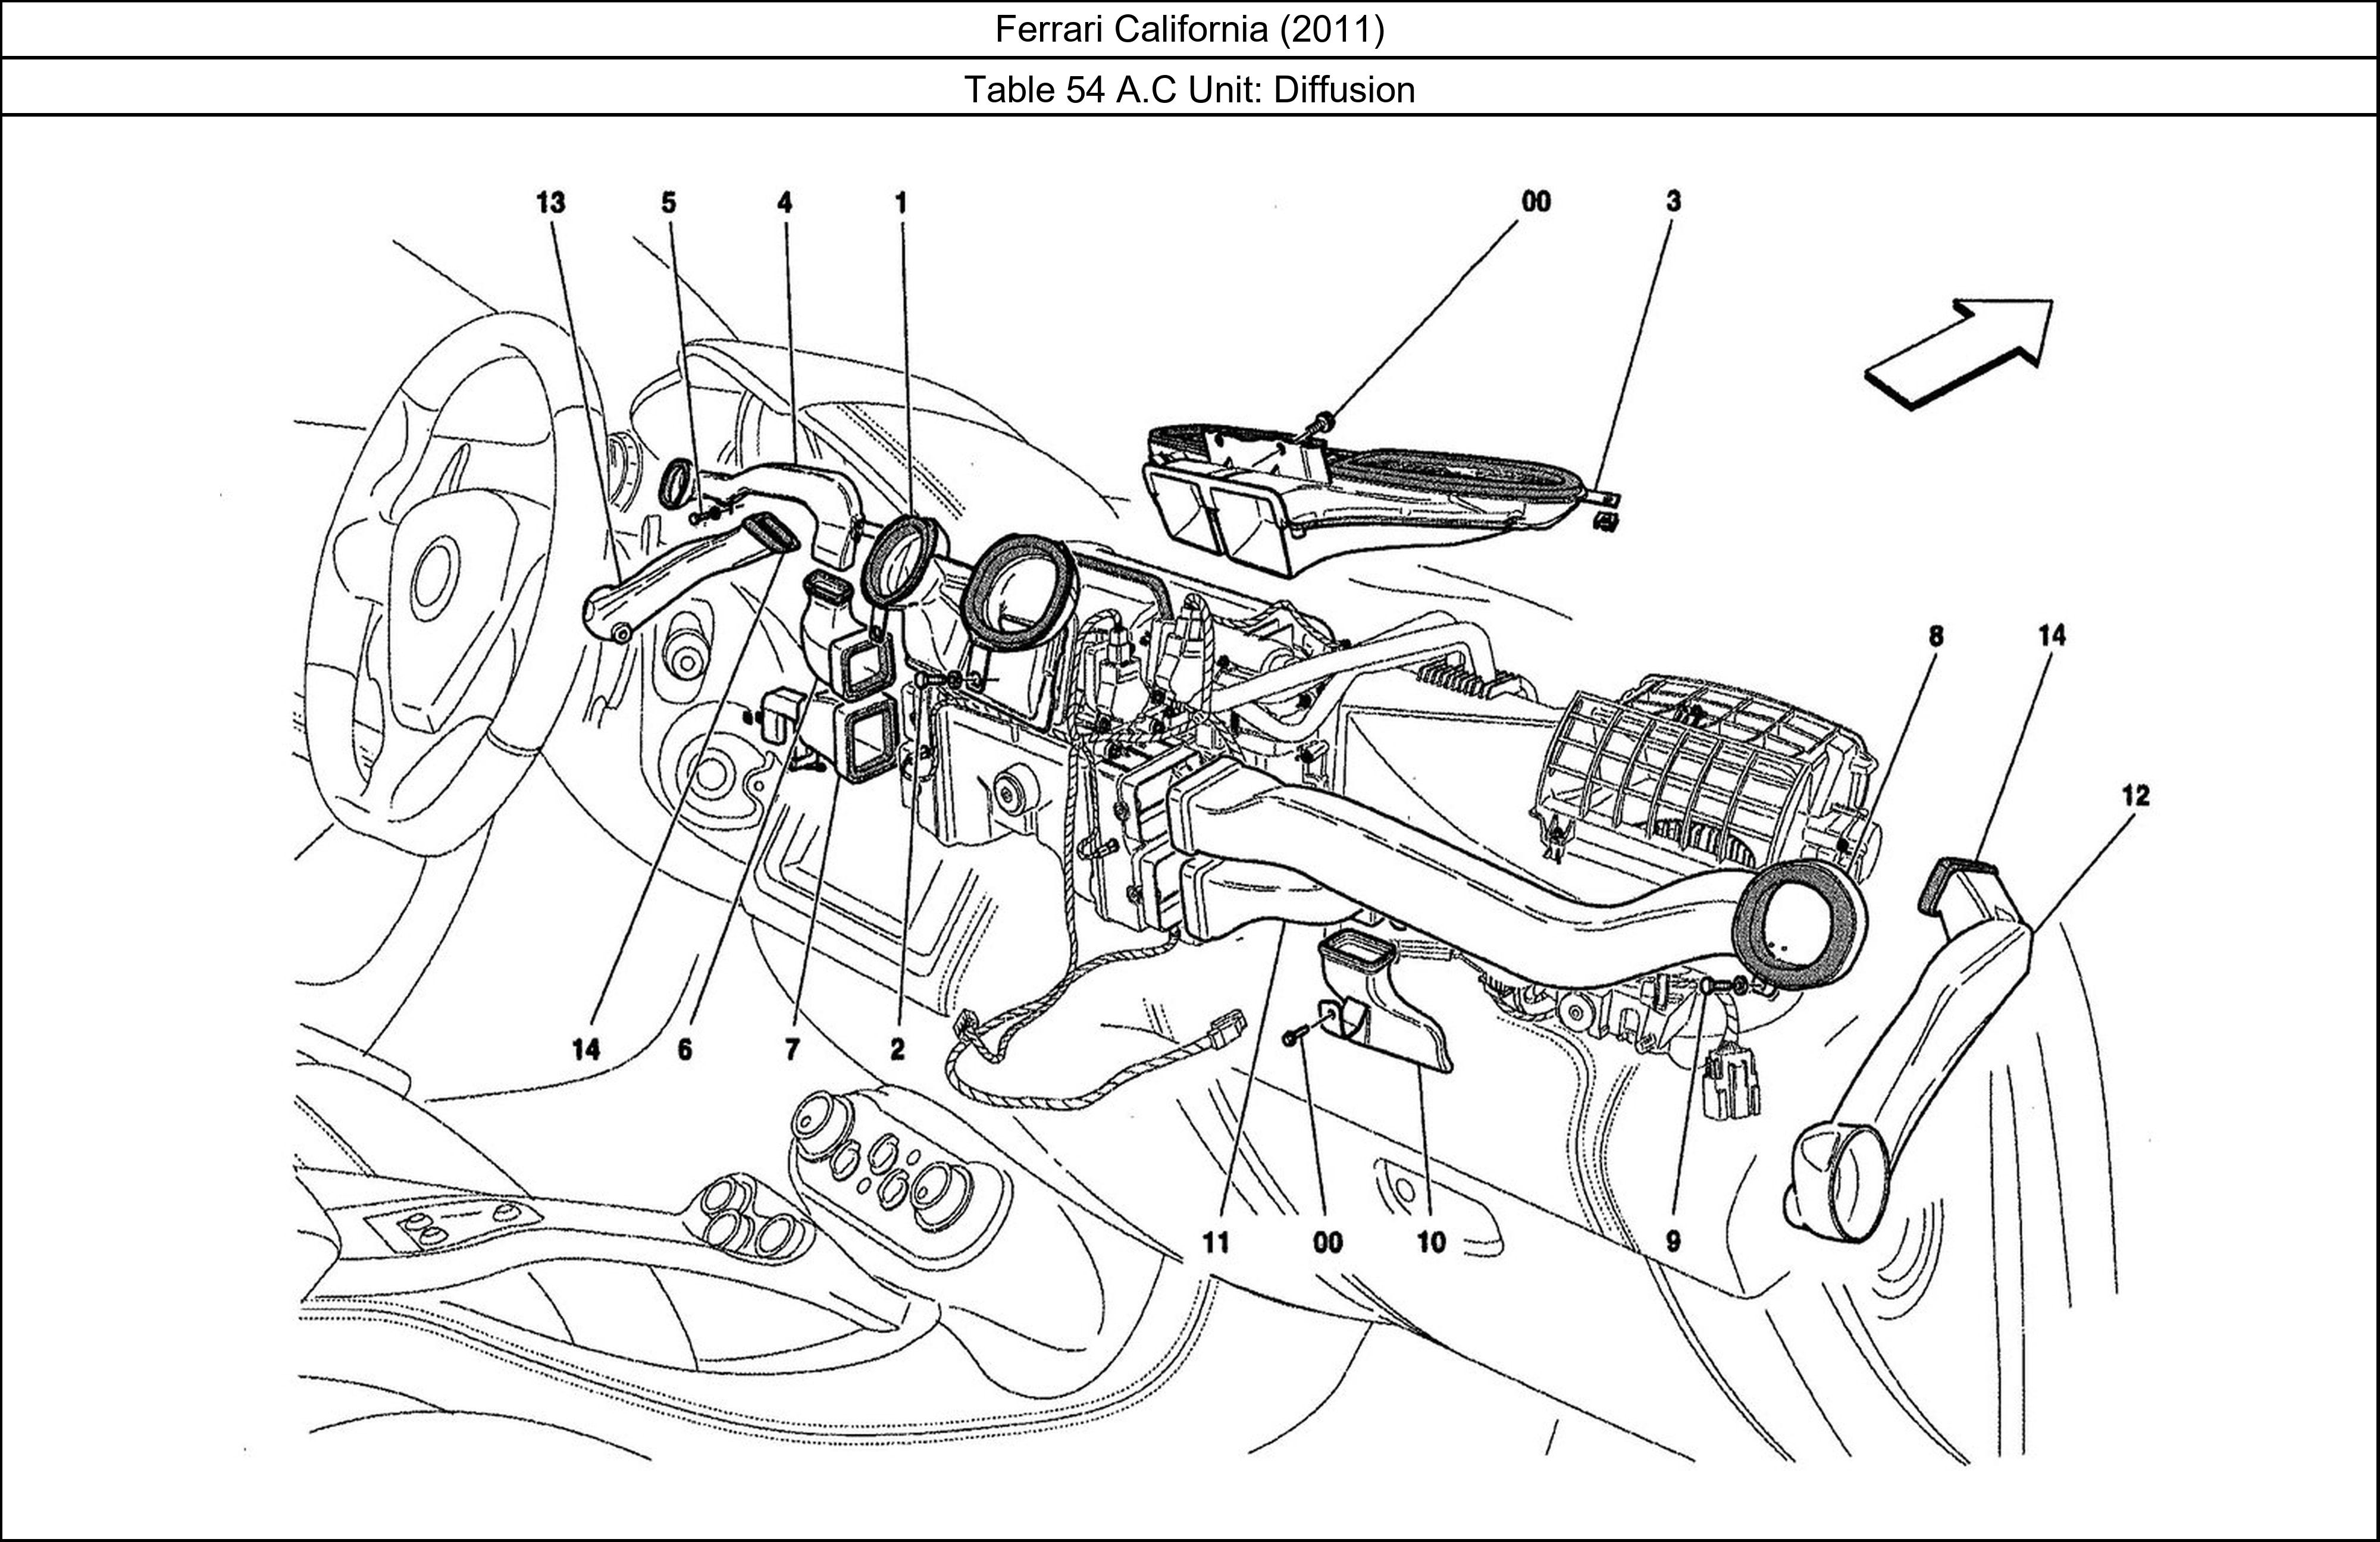 Ferrari Parts Ferrari California (2011) Table 54 A.C Unit: Diffusion